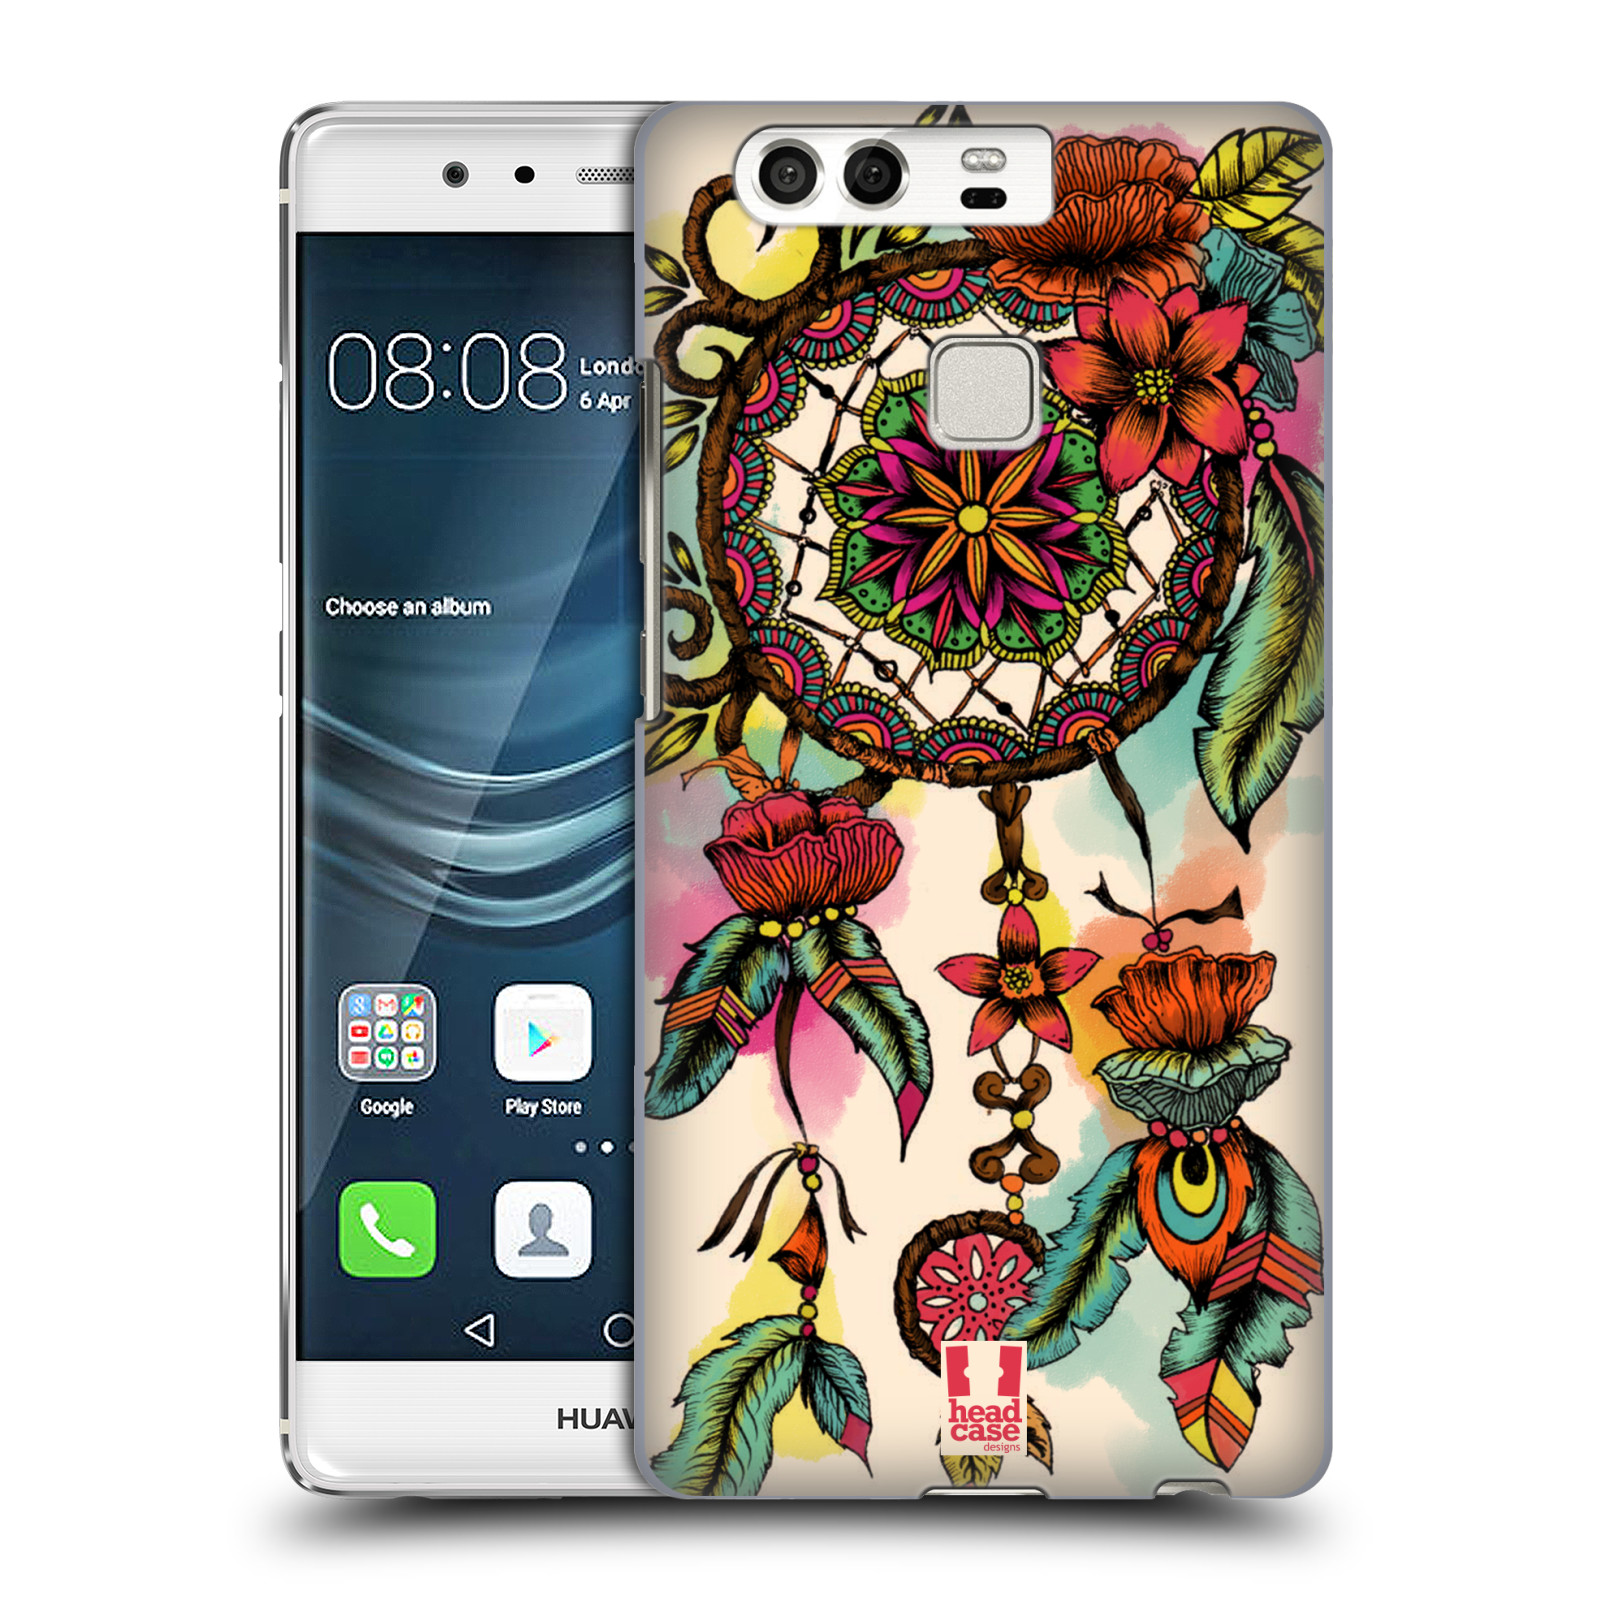 HEAD CASE plastový obal na mobil Huawei P9 / P9 DUAL SIM vzor Květy lapač snů FLORID